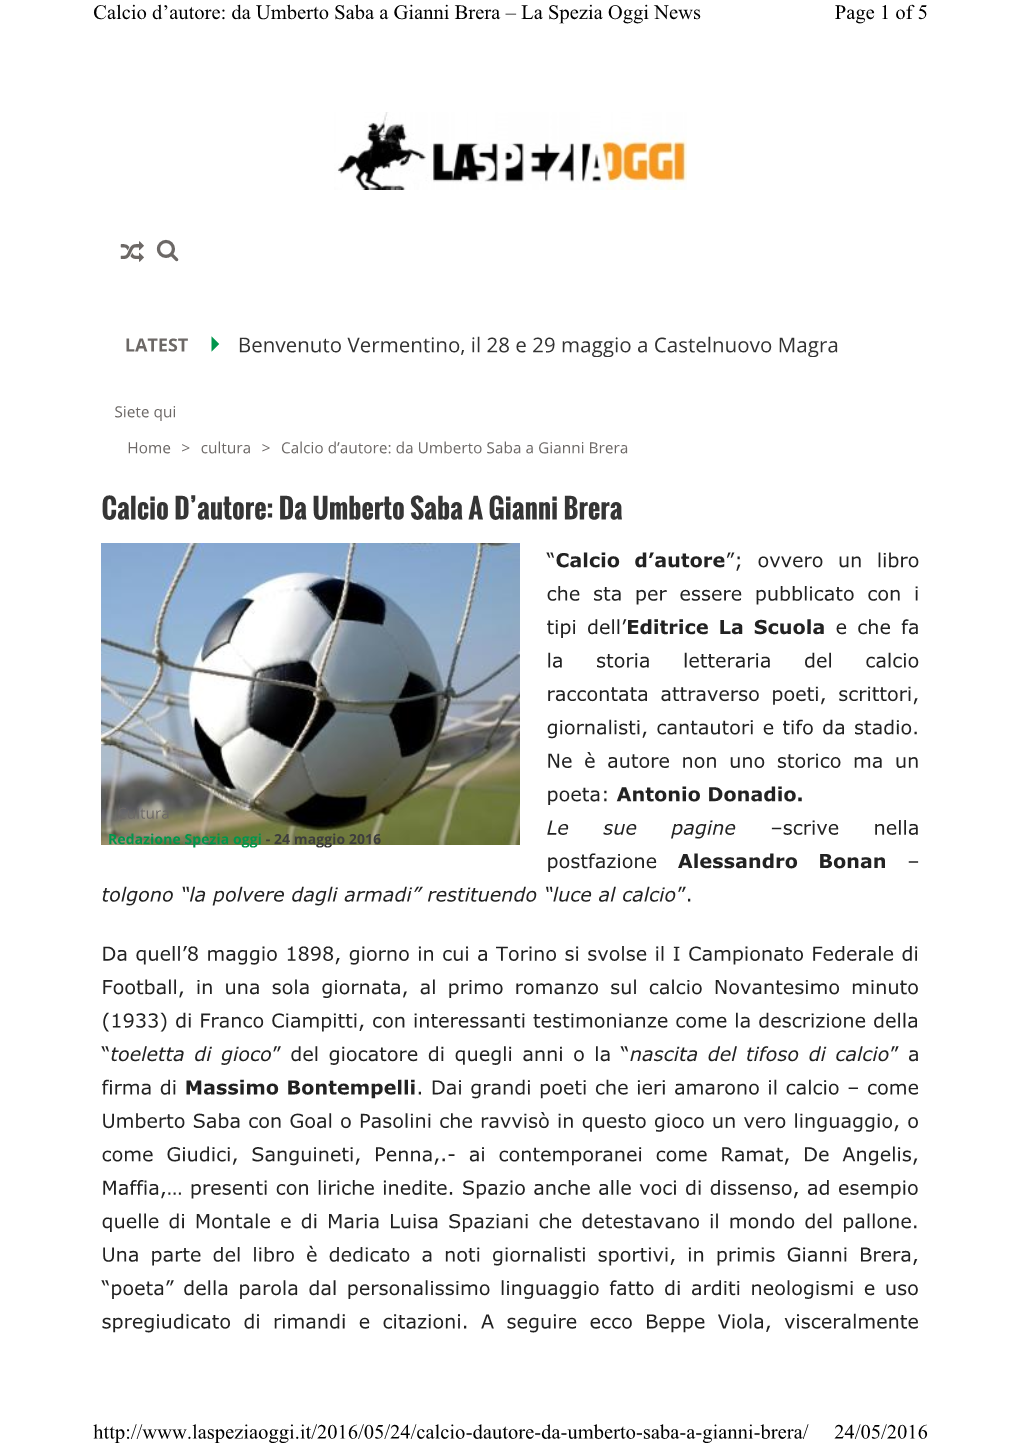 Calcio D'autore: Da Umberto Saba a Gianni Brera